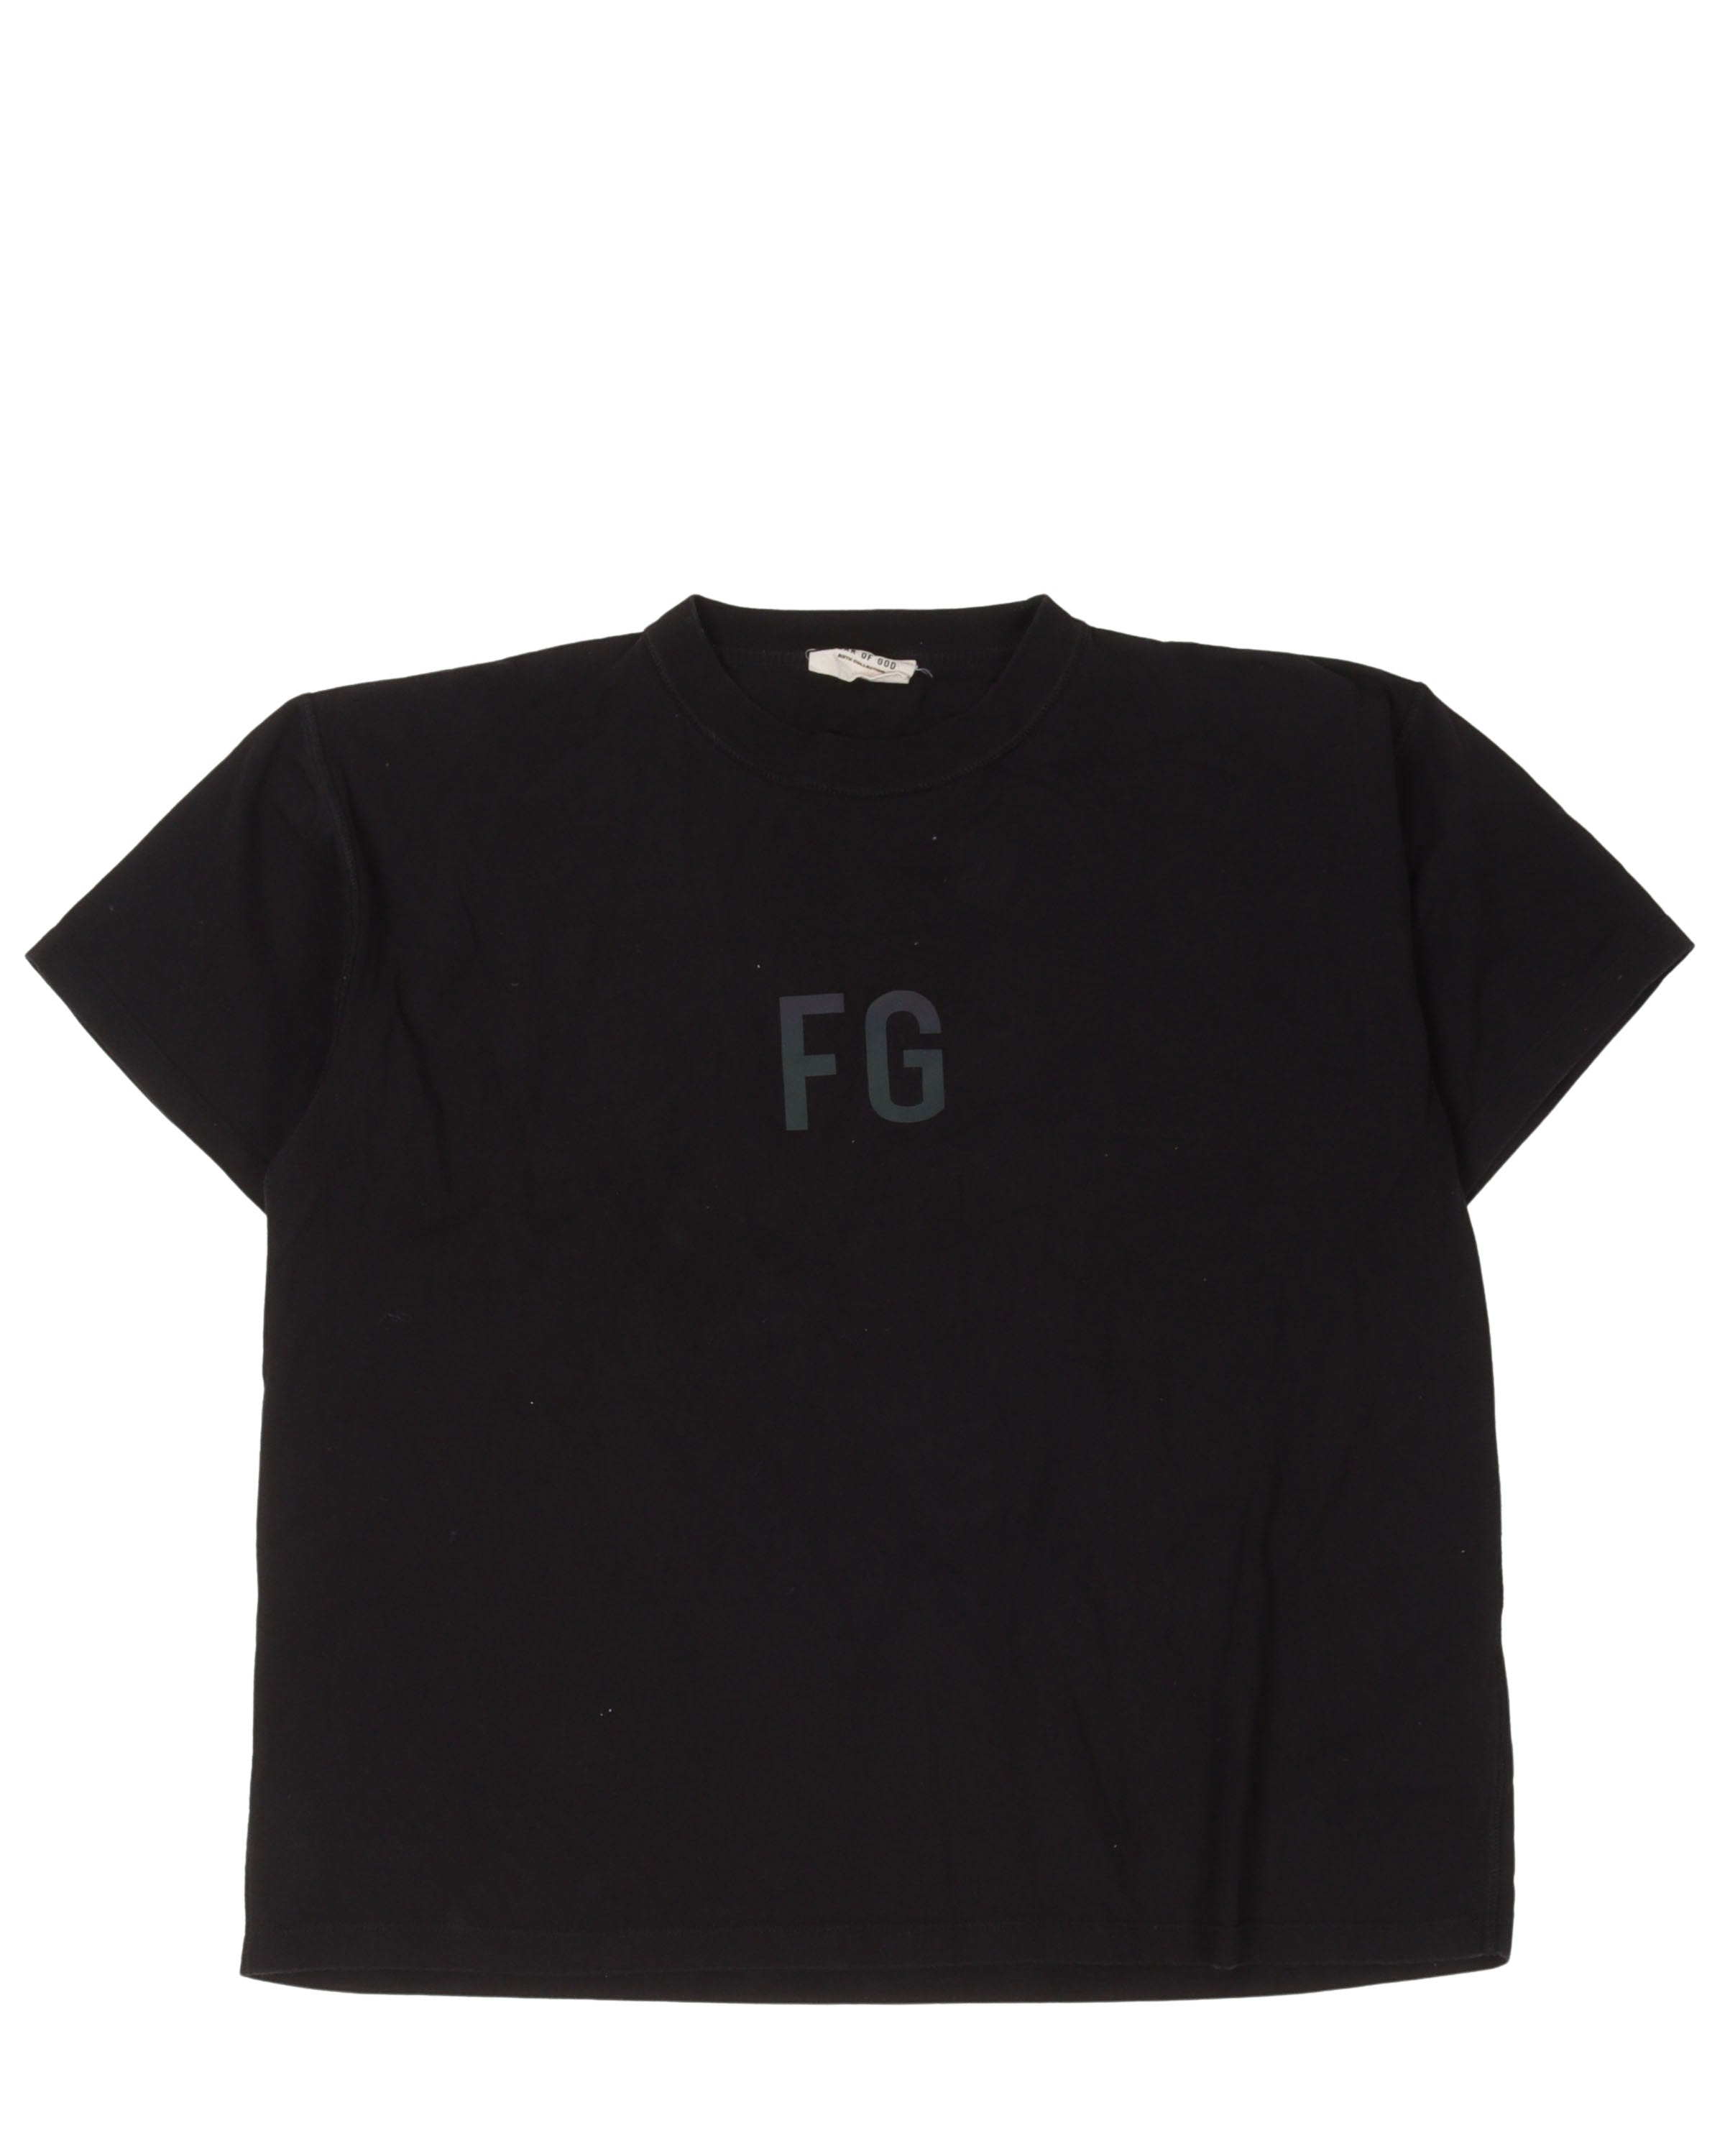 Fear of God FG T-shirt